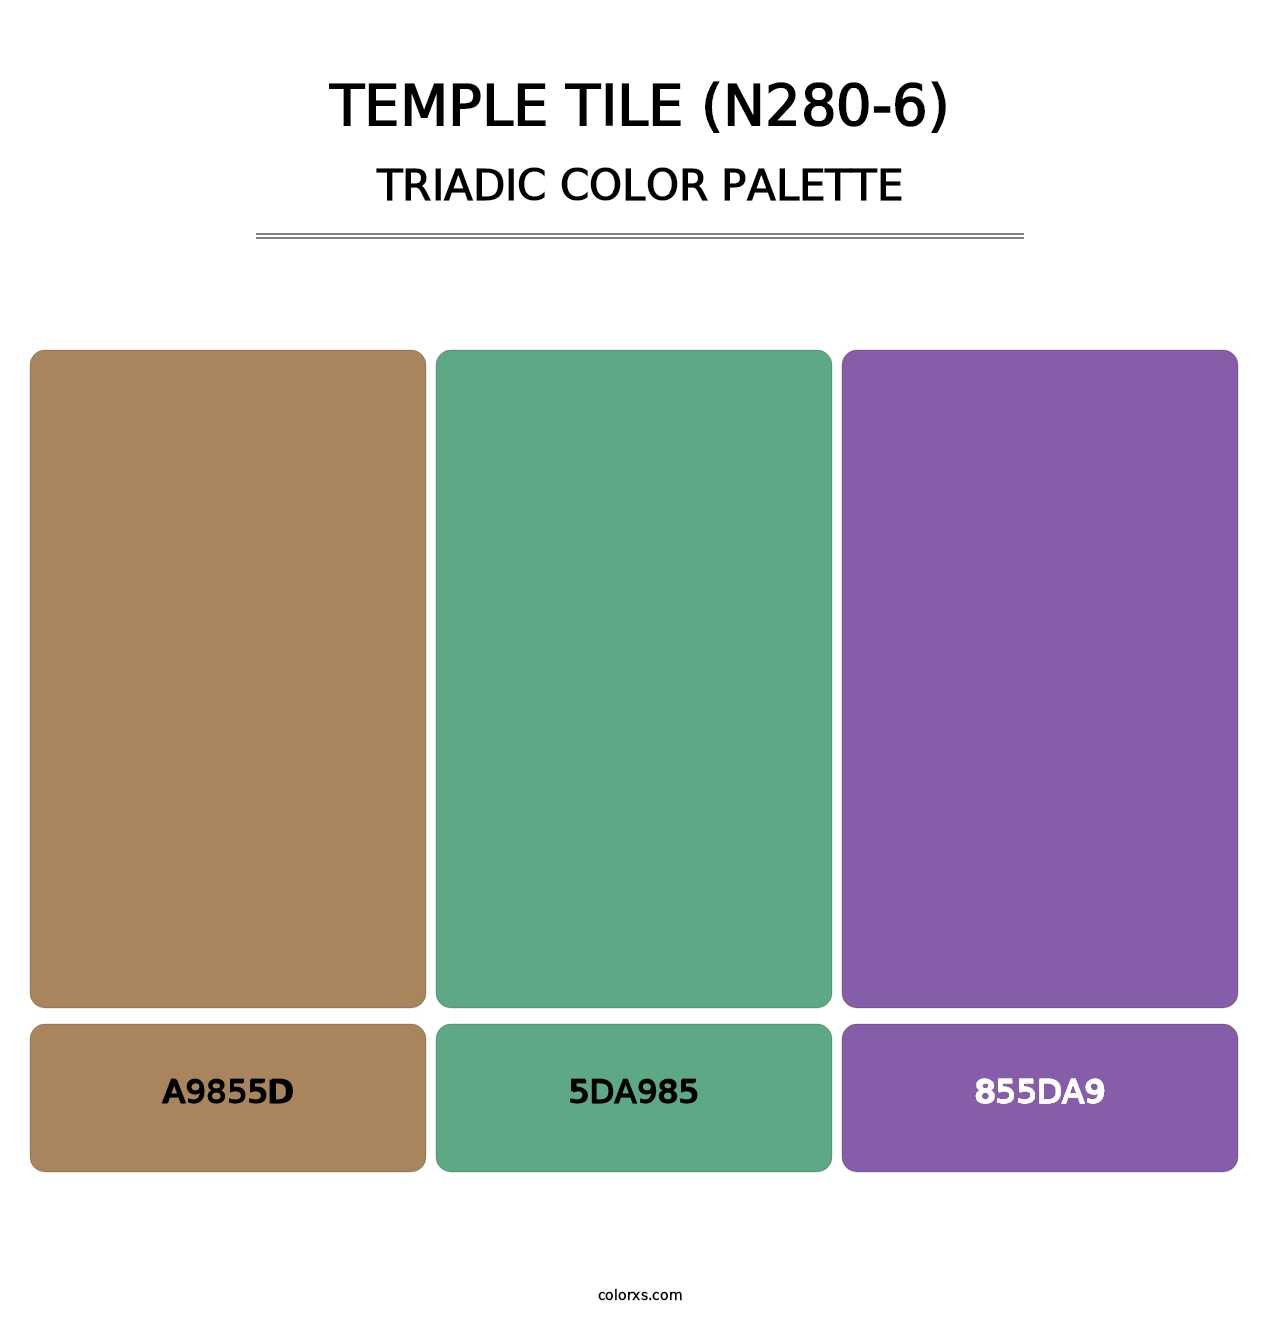 Temple Tile (N280-6) - Triadic Color Palette